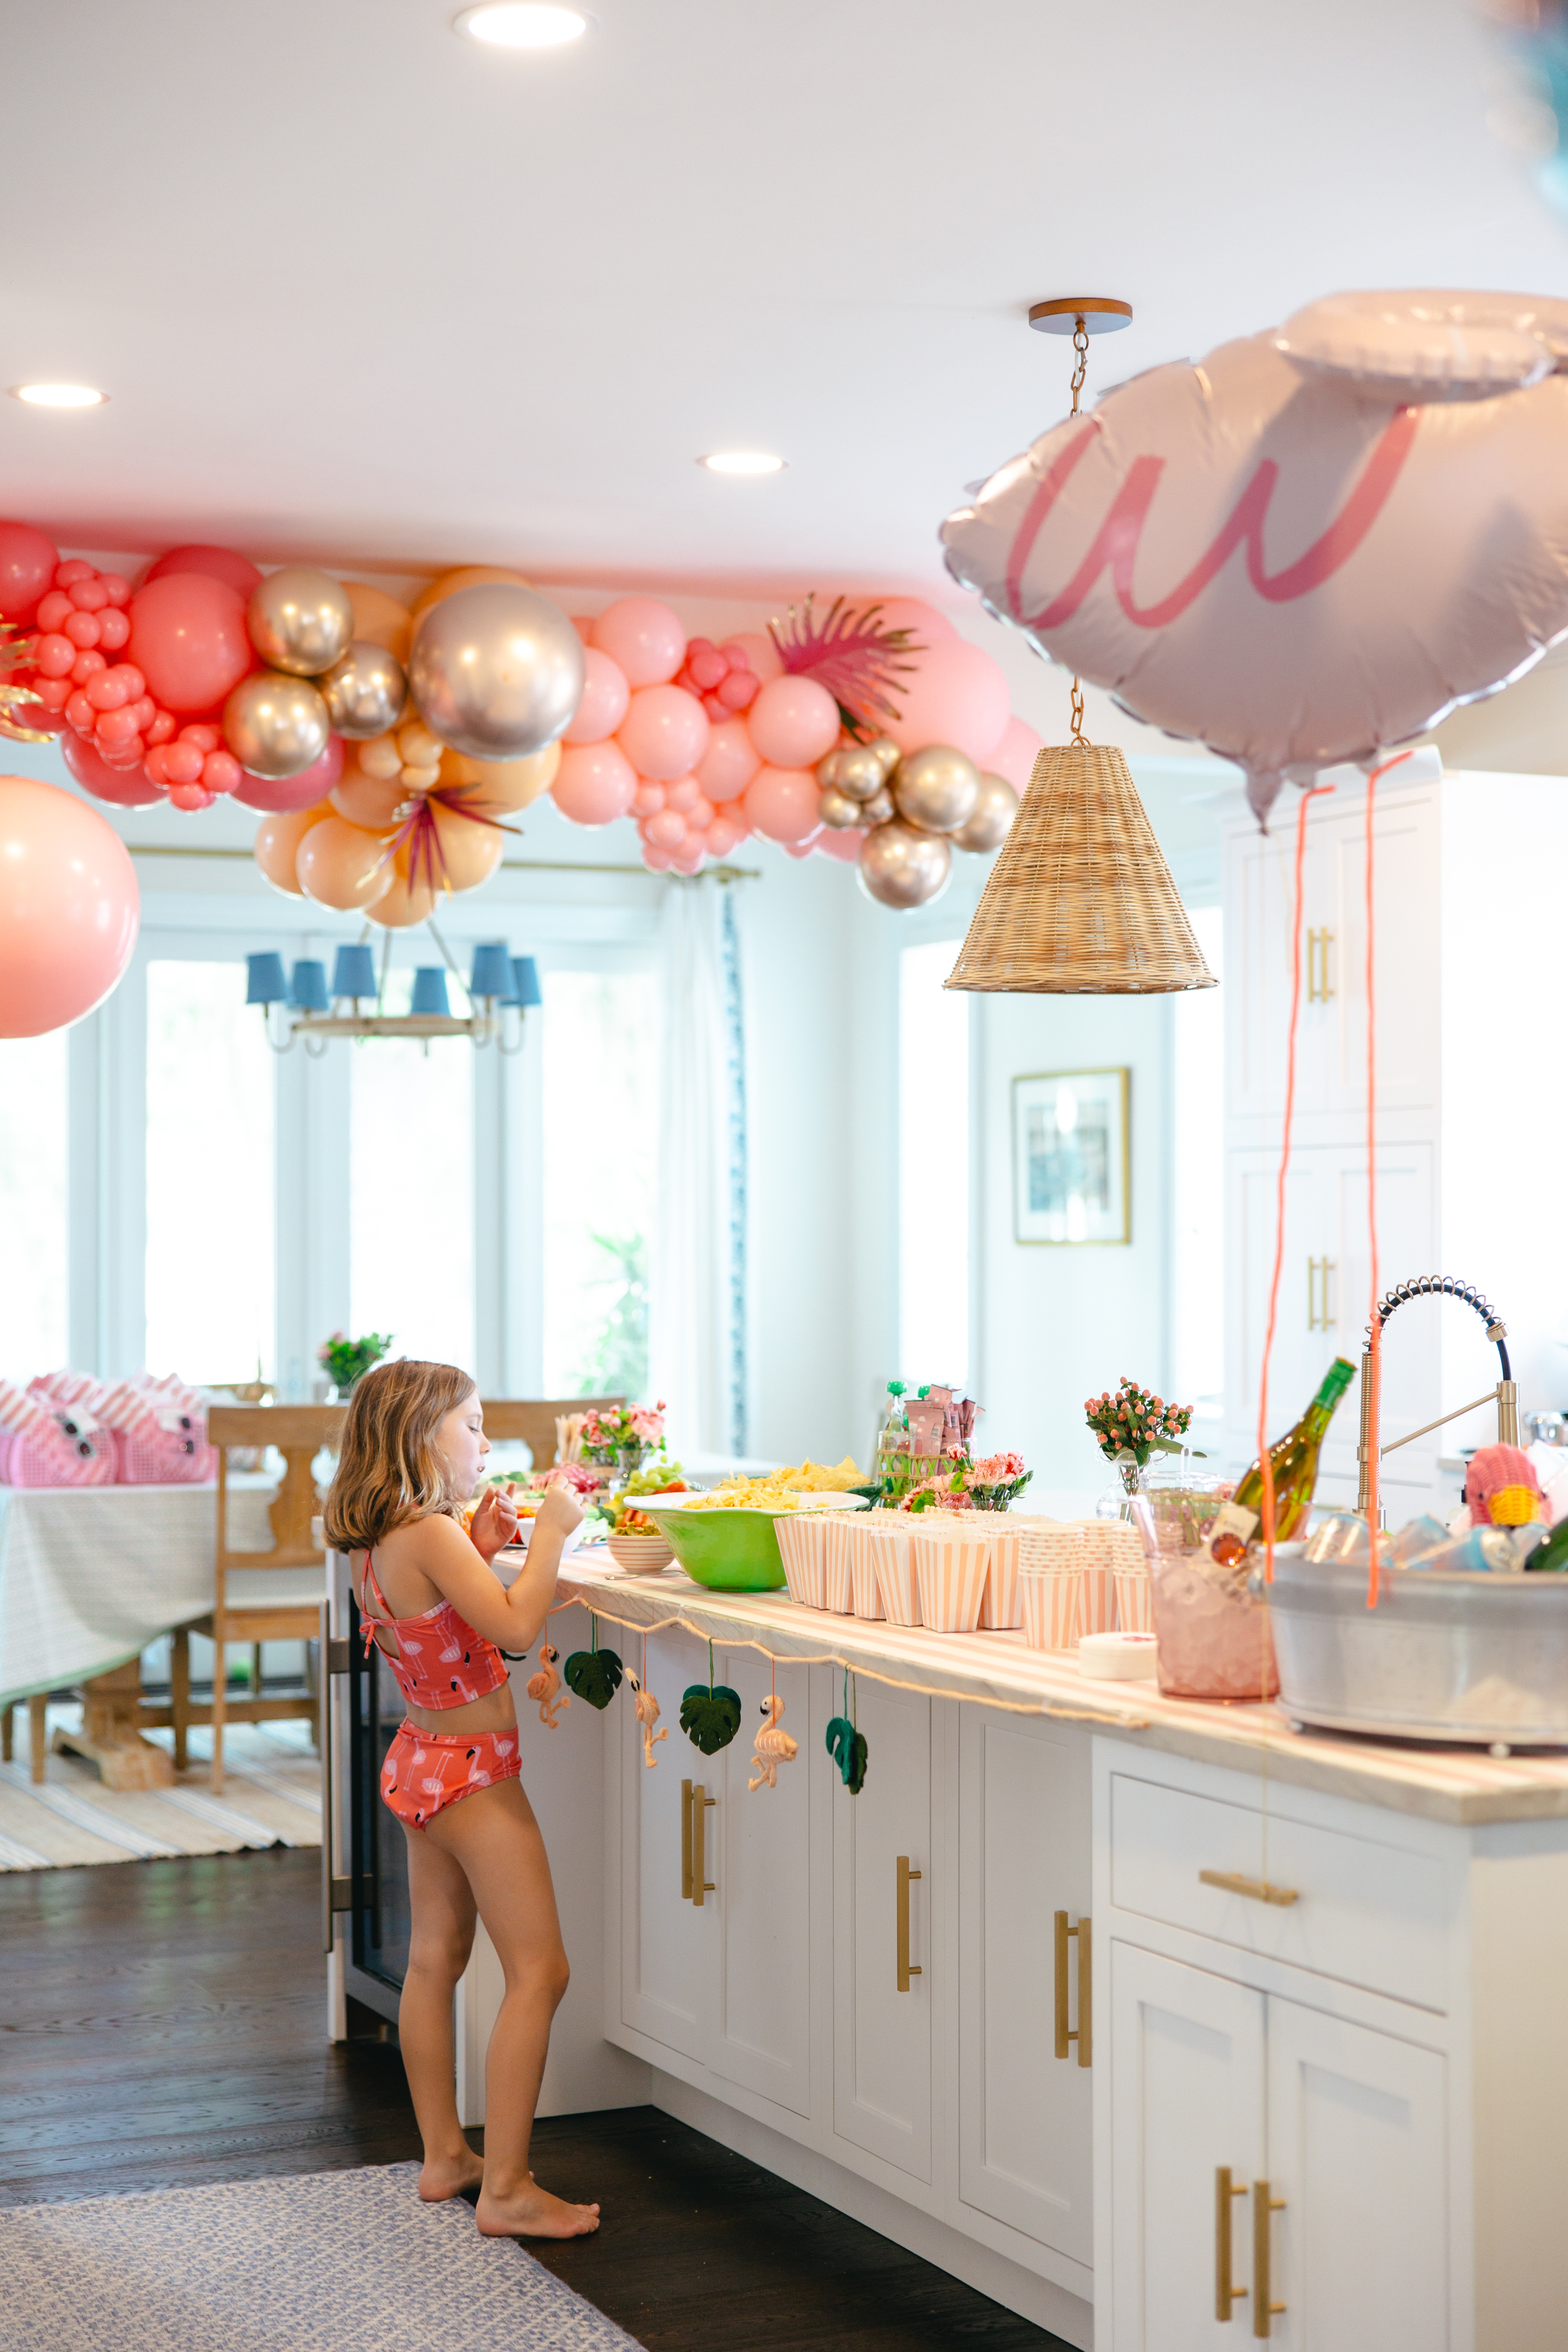 A Pool Cabana 7th Birthday Party – Let’s Flamingle!